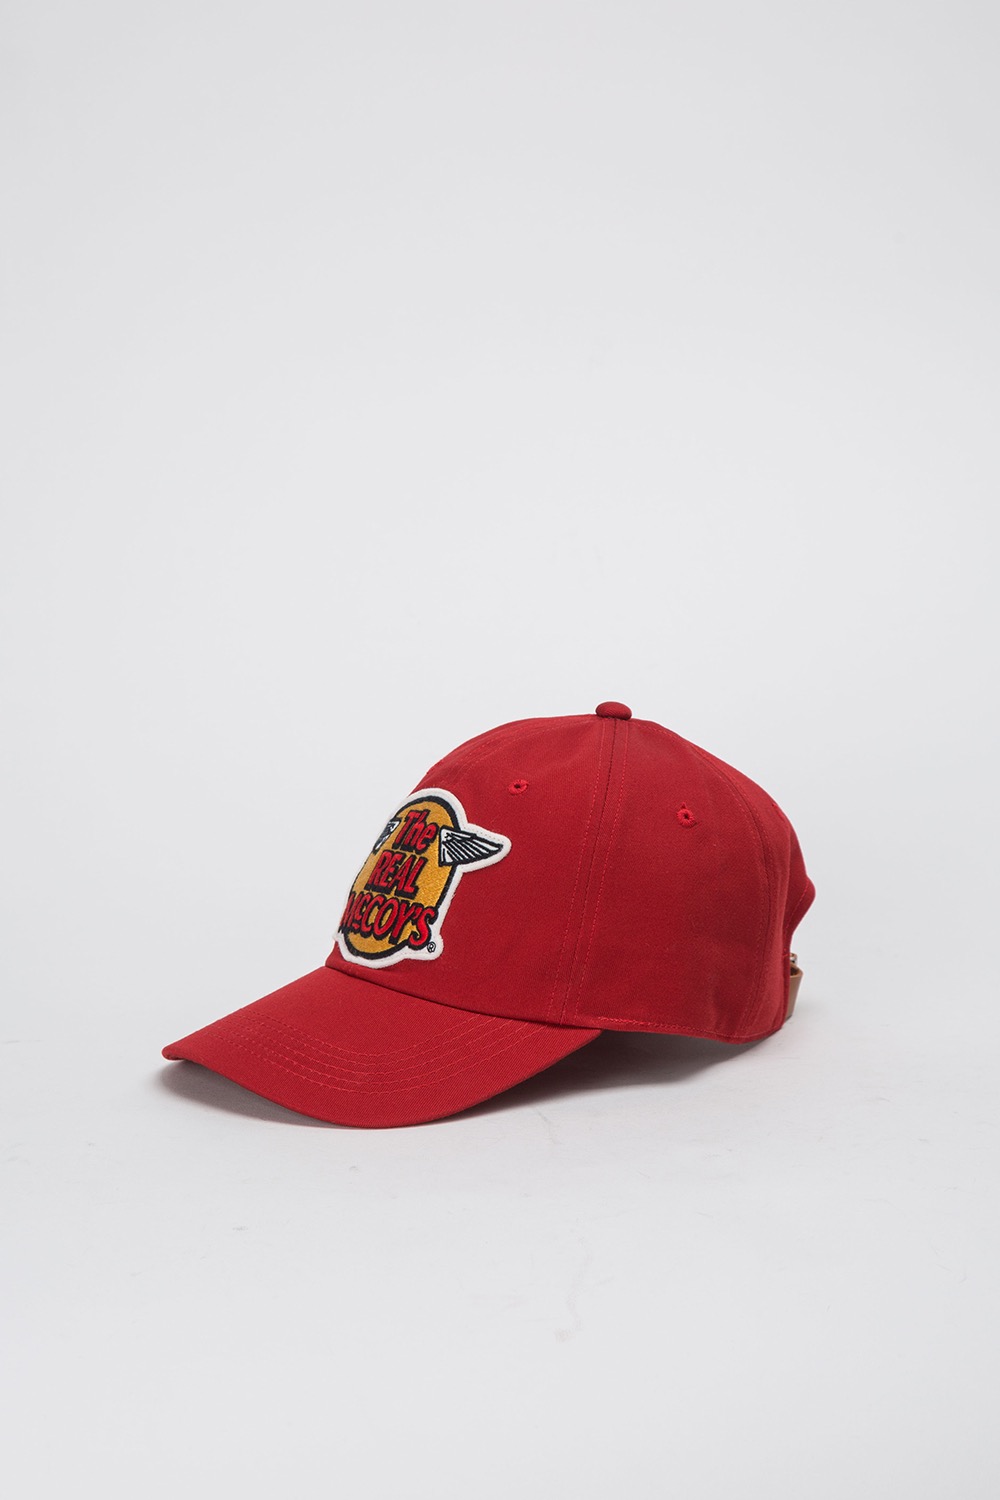 (RESTOCK) THE REAL McCOY&#039;S LOGO BASEBALL CAP RED